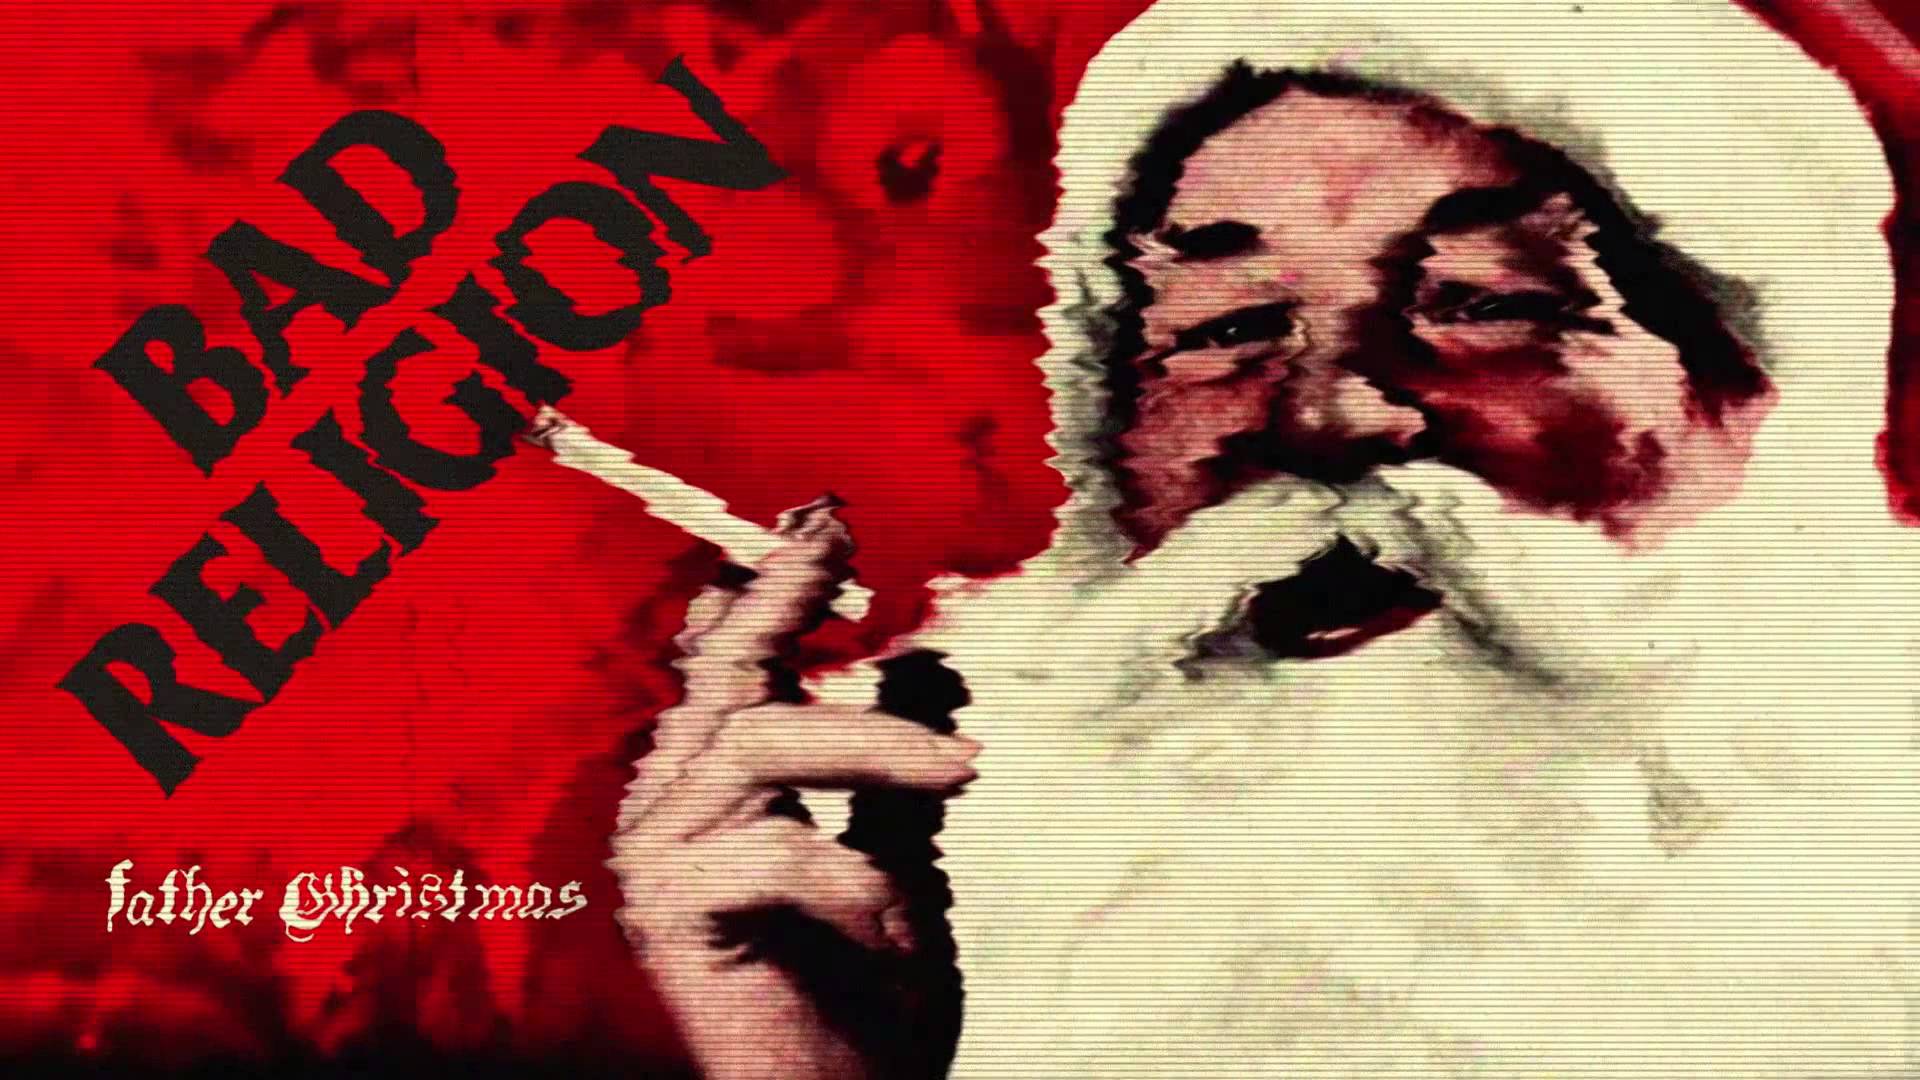 Bad Religion - Father Christmas - YouTube